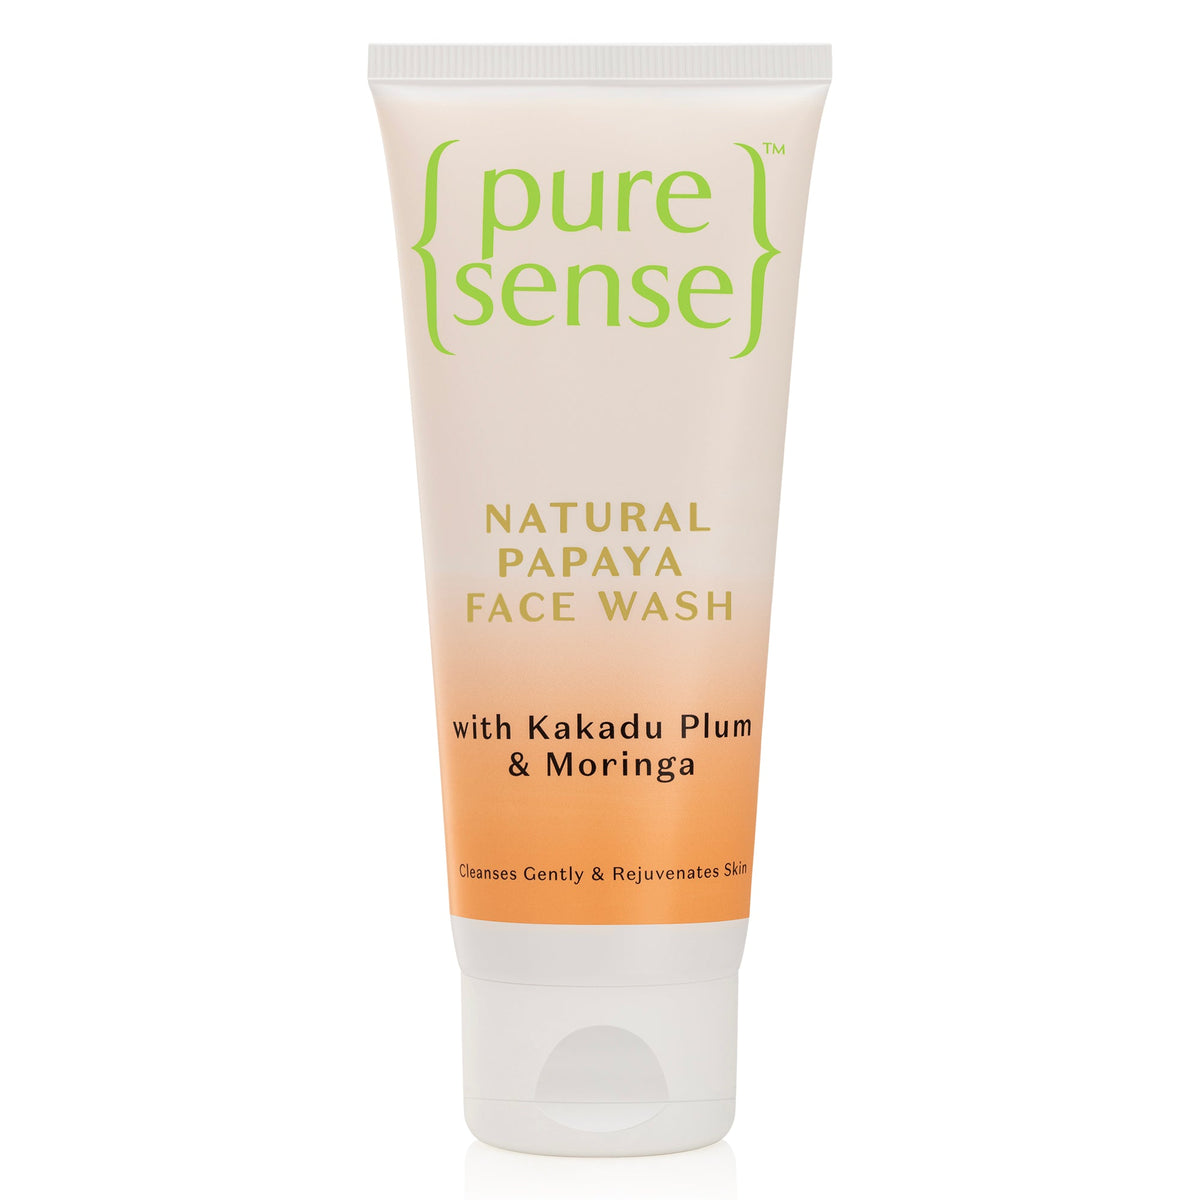 [CRED] Natural Papaya Face Wash | From the makers of Parachute Advansed | 100ml